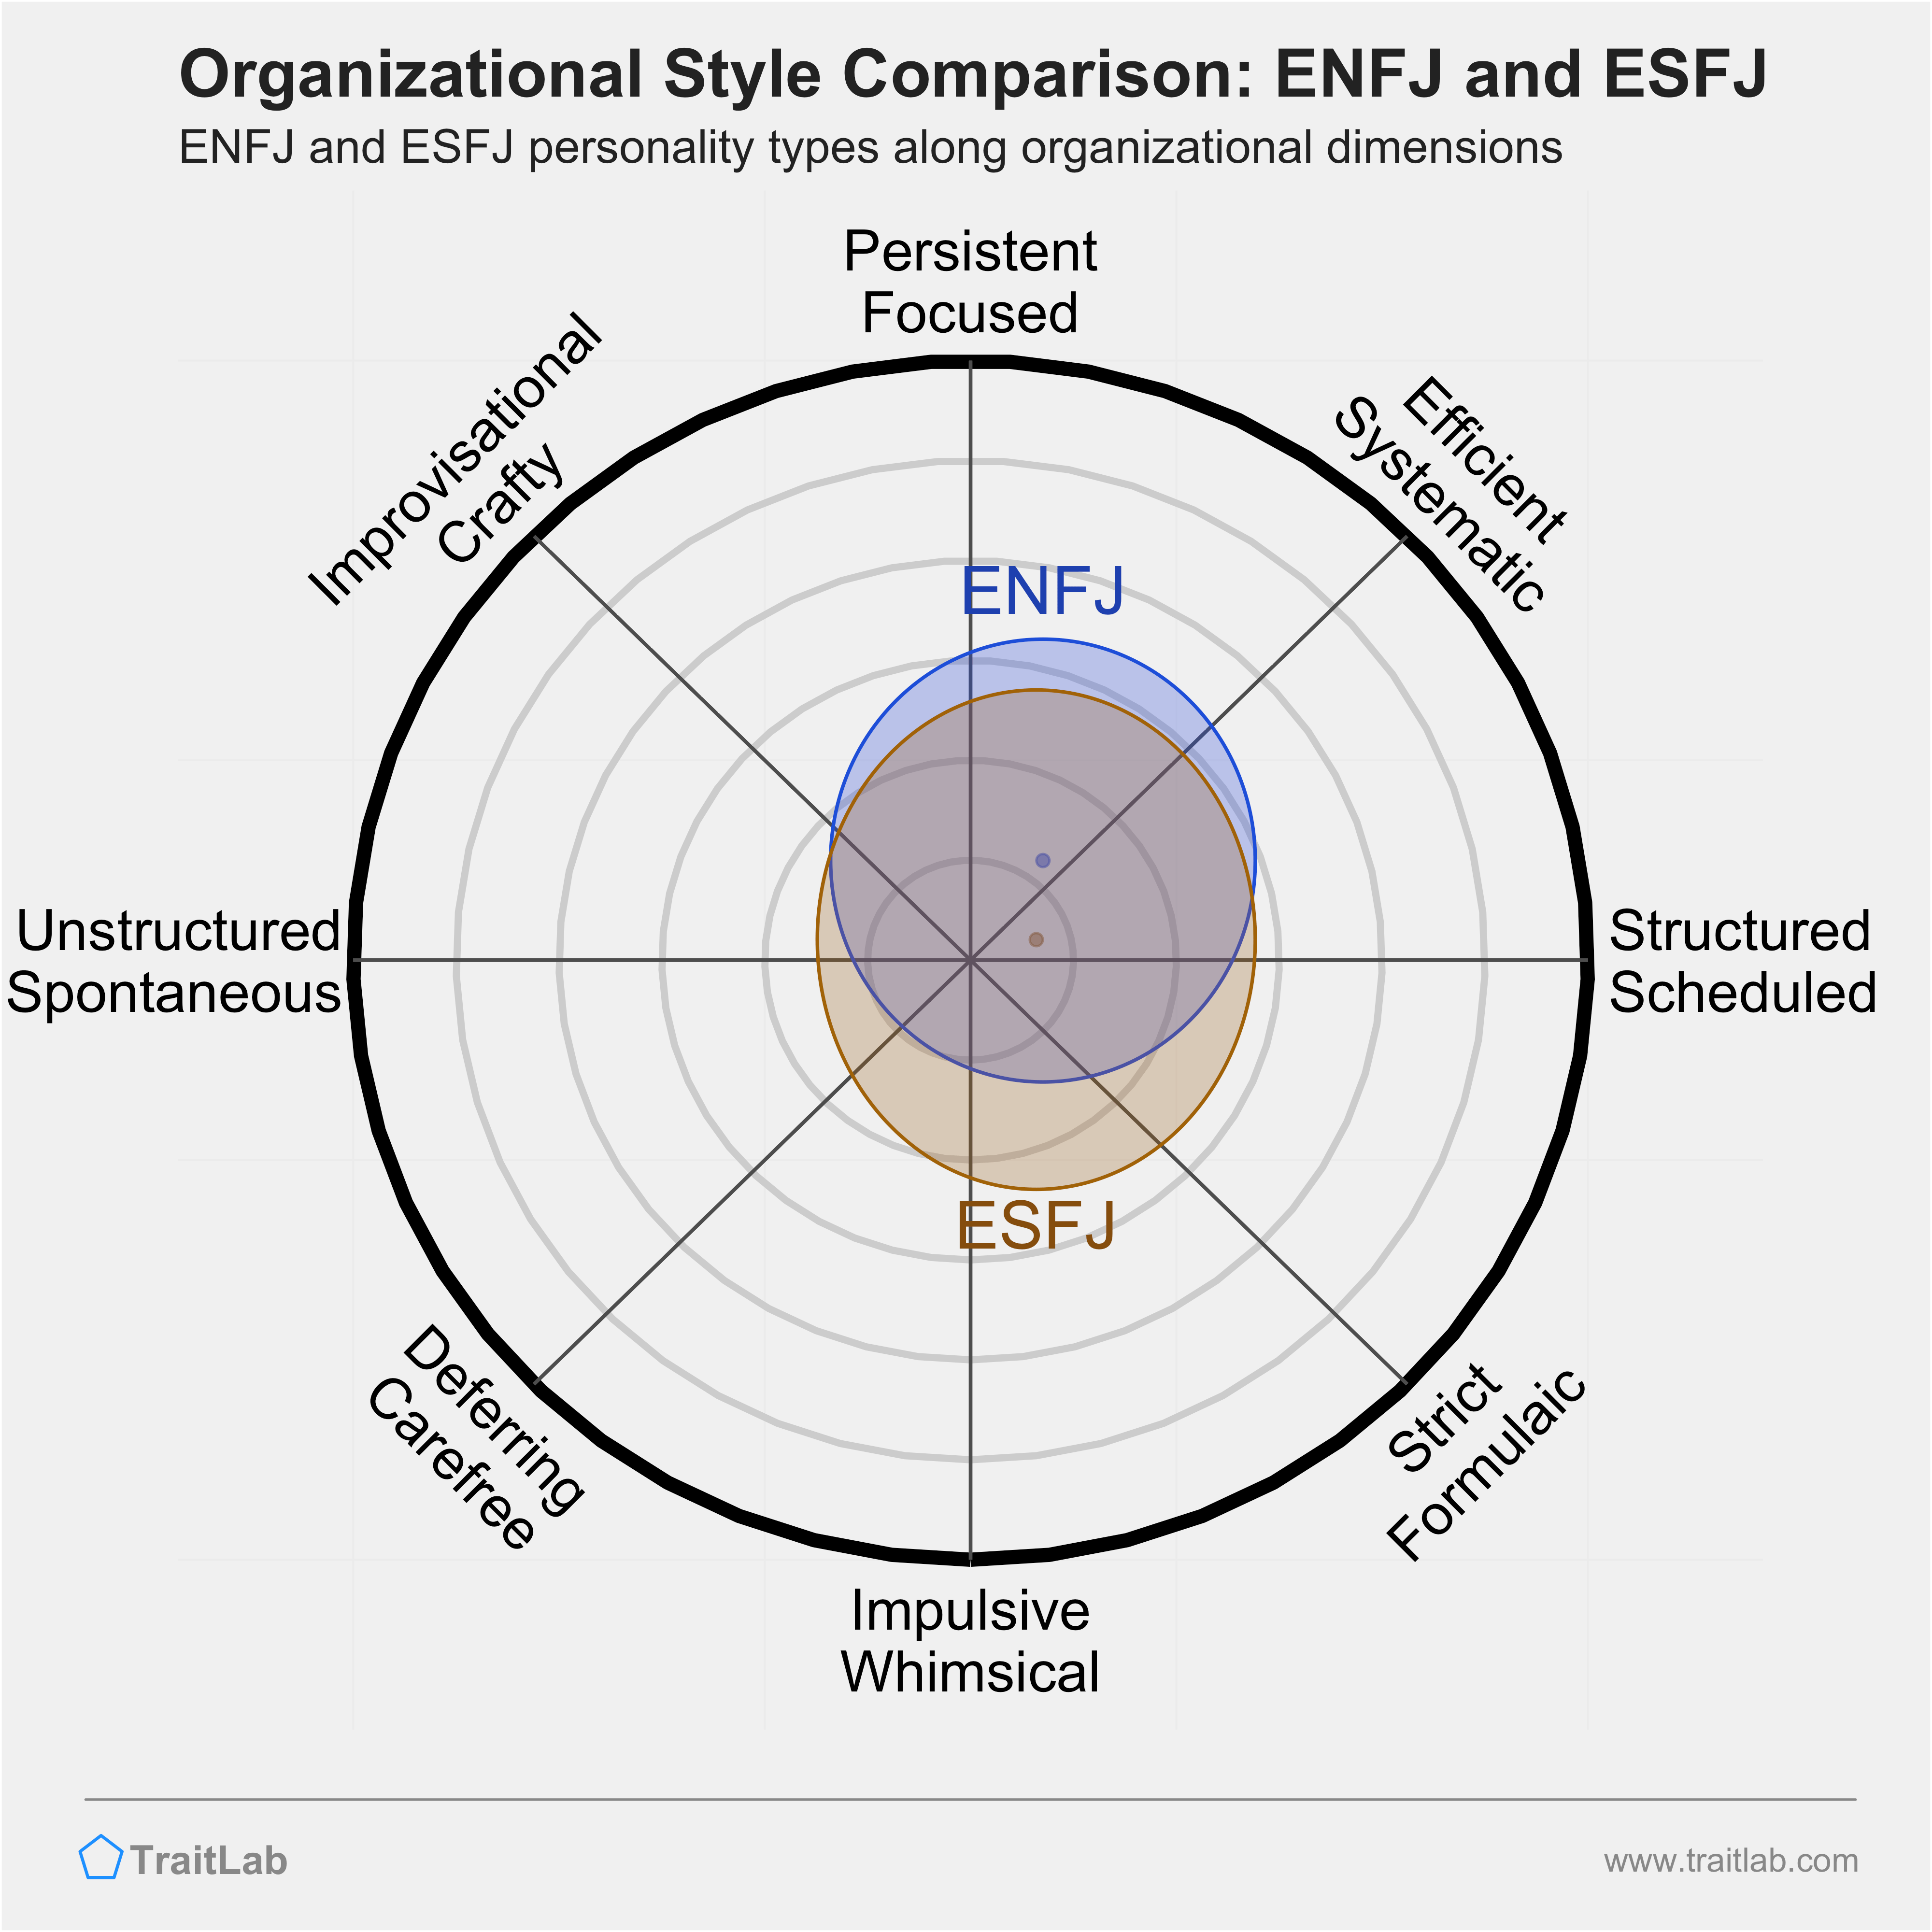 ENFJ and ESFJ comparison across organizational dimensions